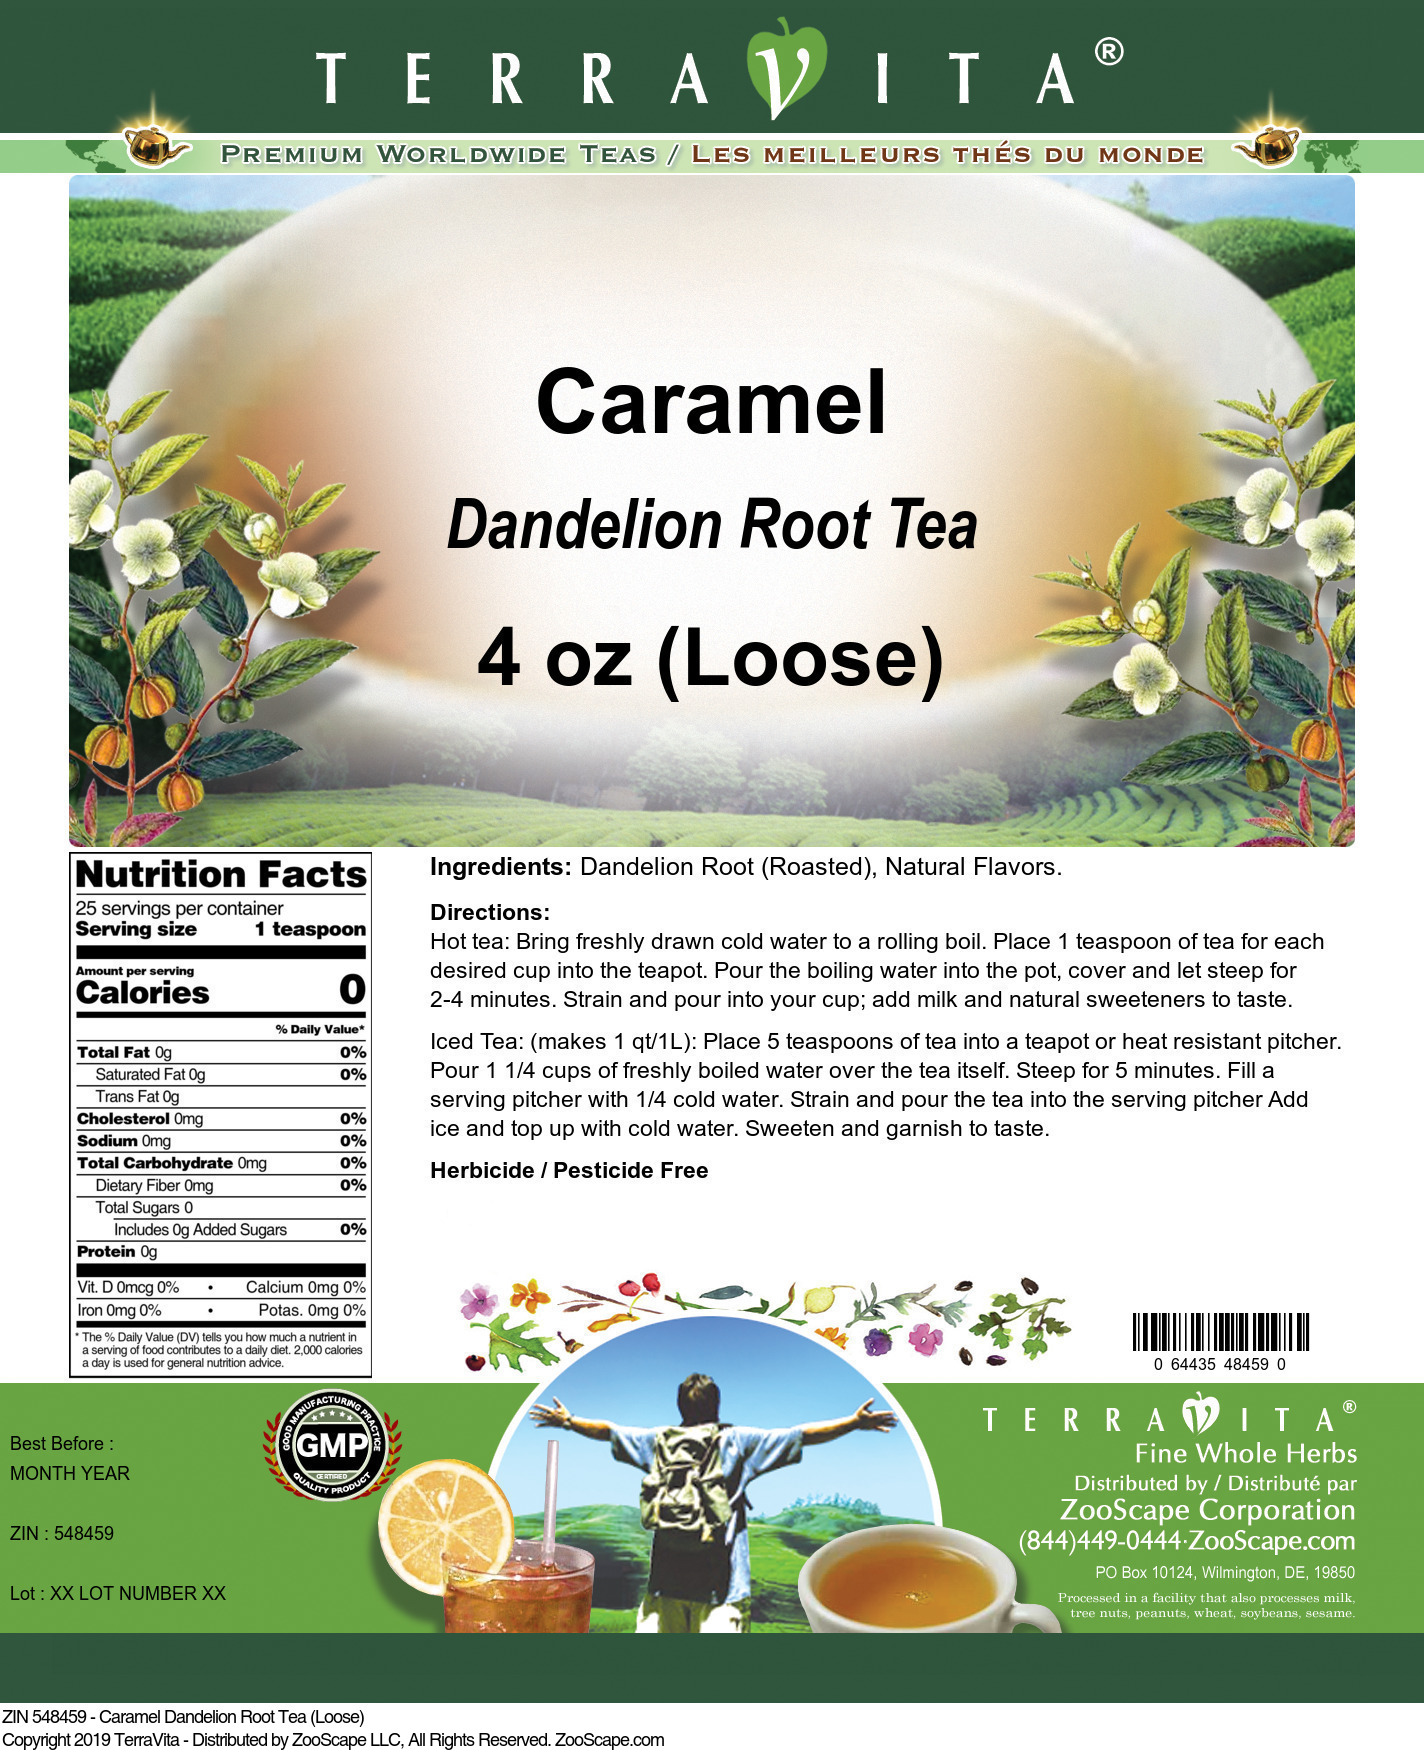 Caramel Dandelion Root Tea (Loose) - Label